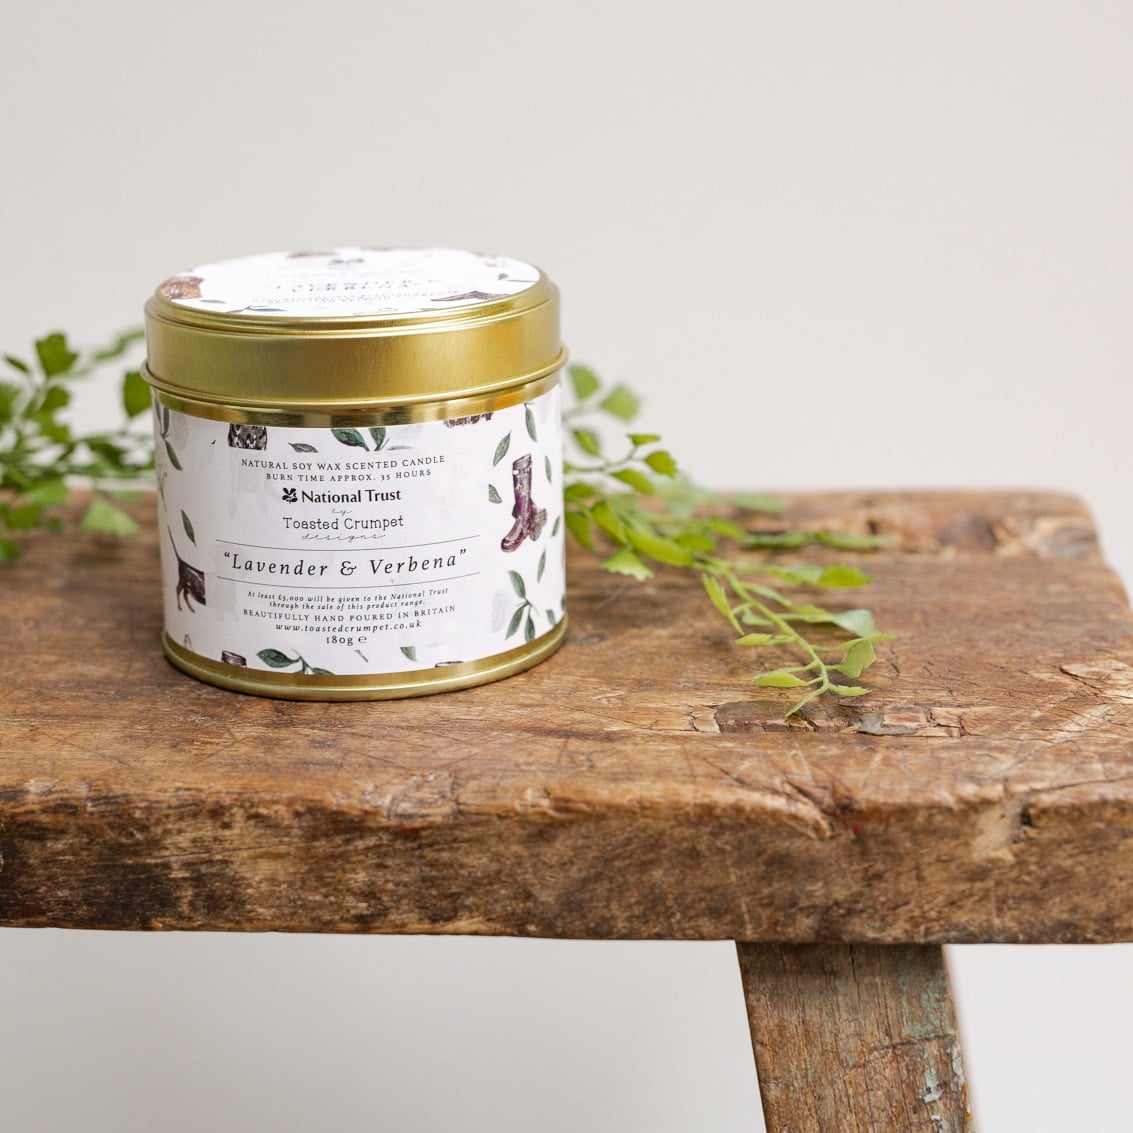 Natural Trust Lavender & Verbena Tin Candle in Matt Gold